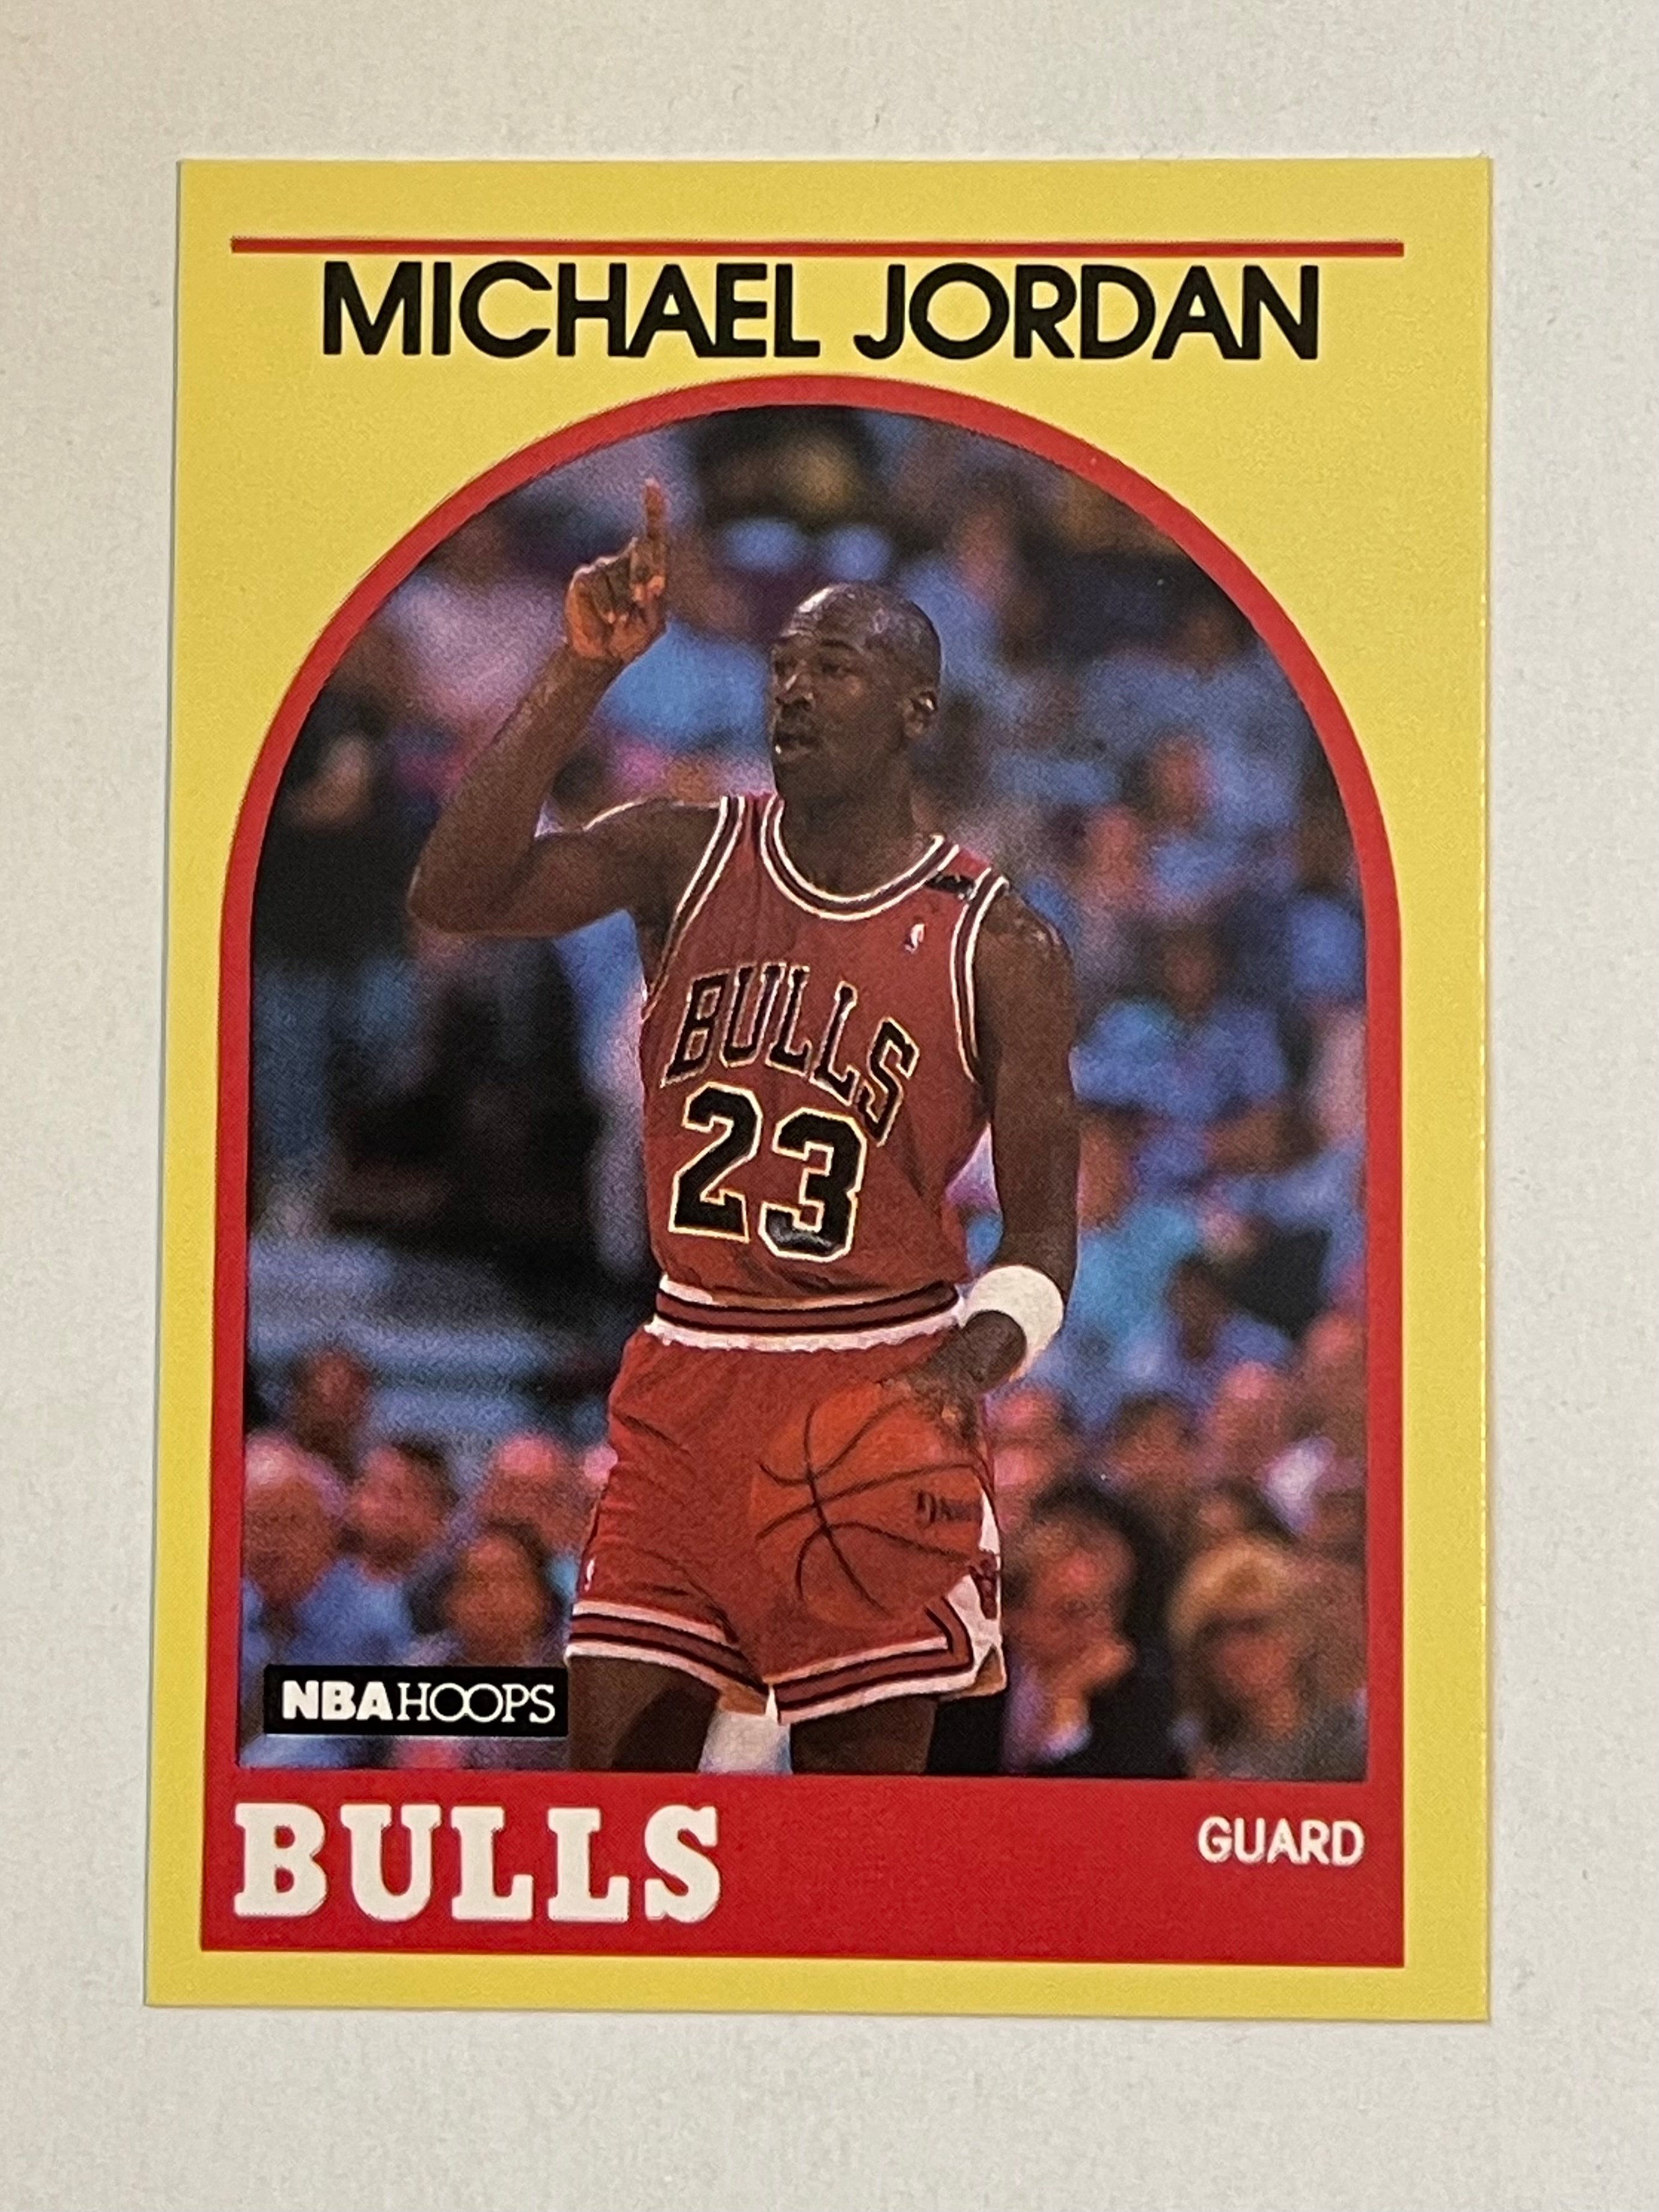 Michael Jordan Hoops Superstar yellow border basketball card 1989